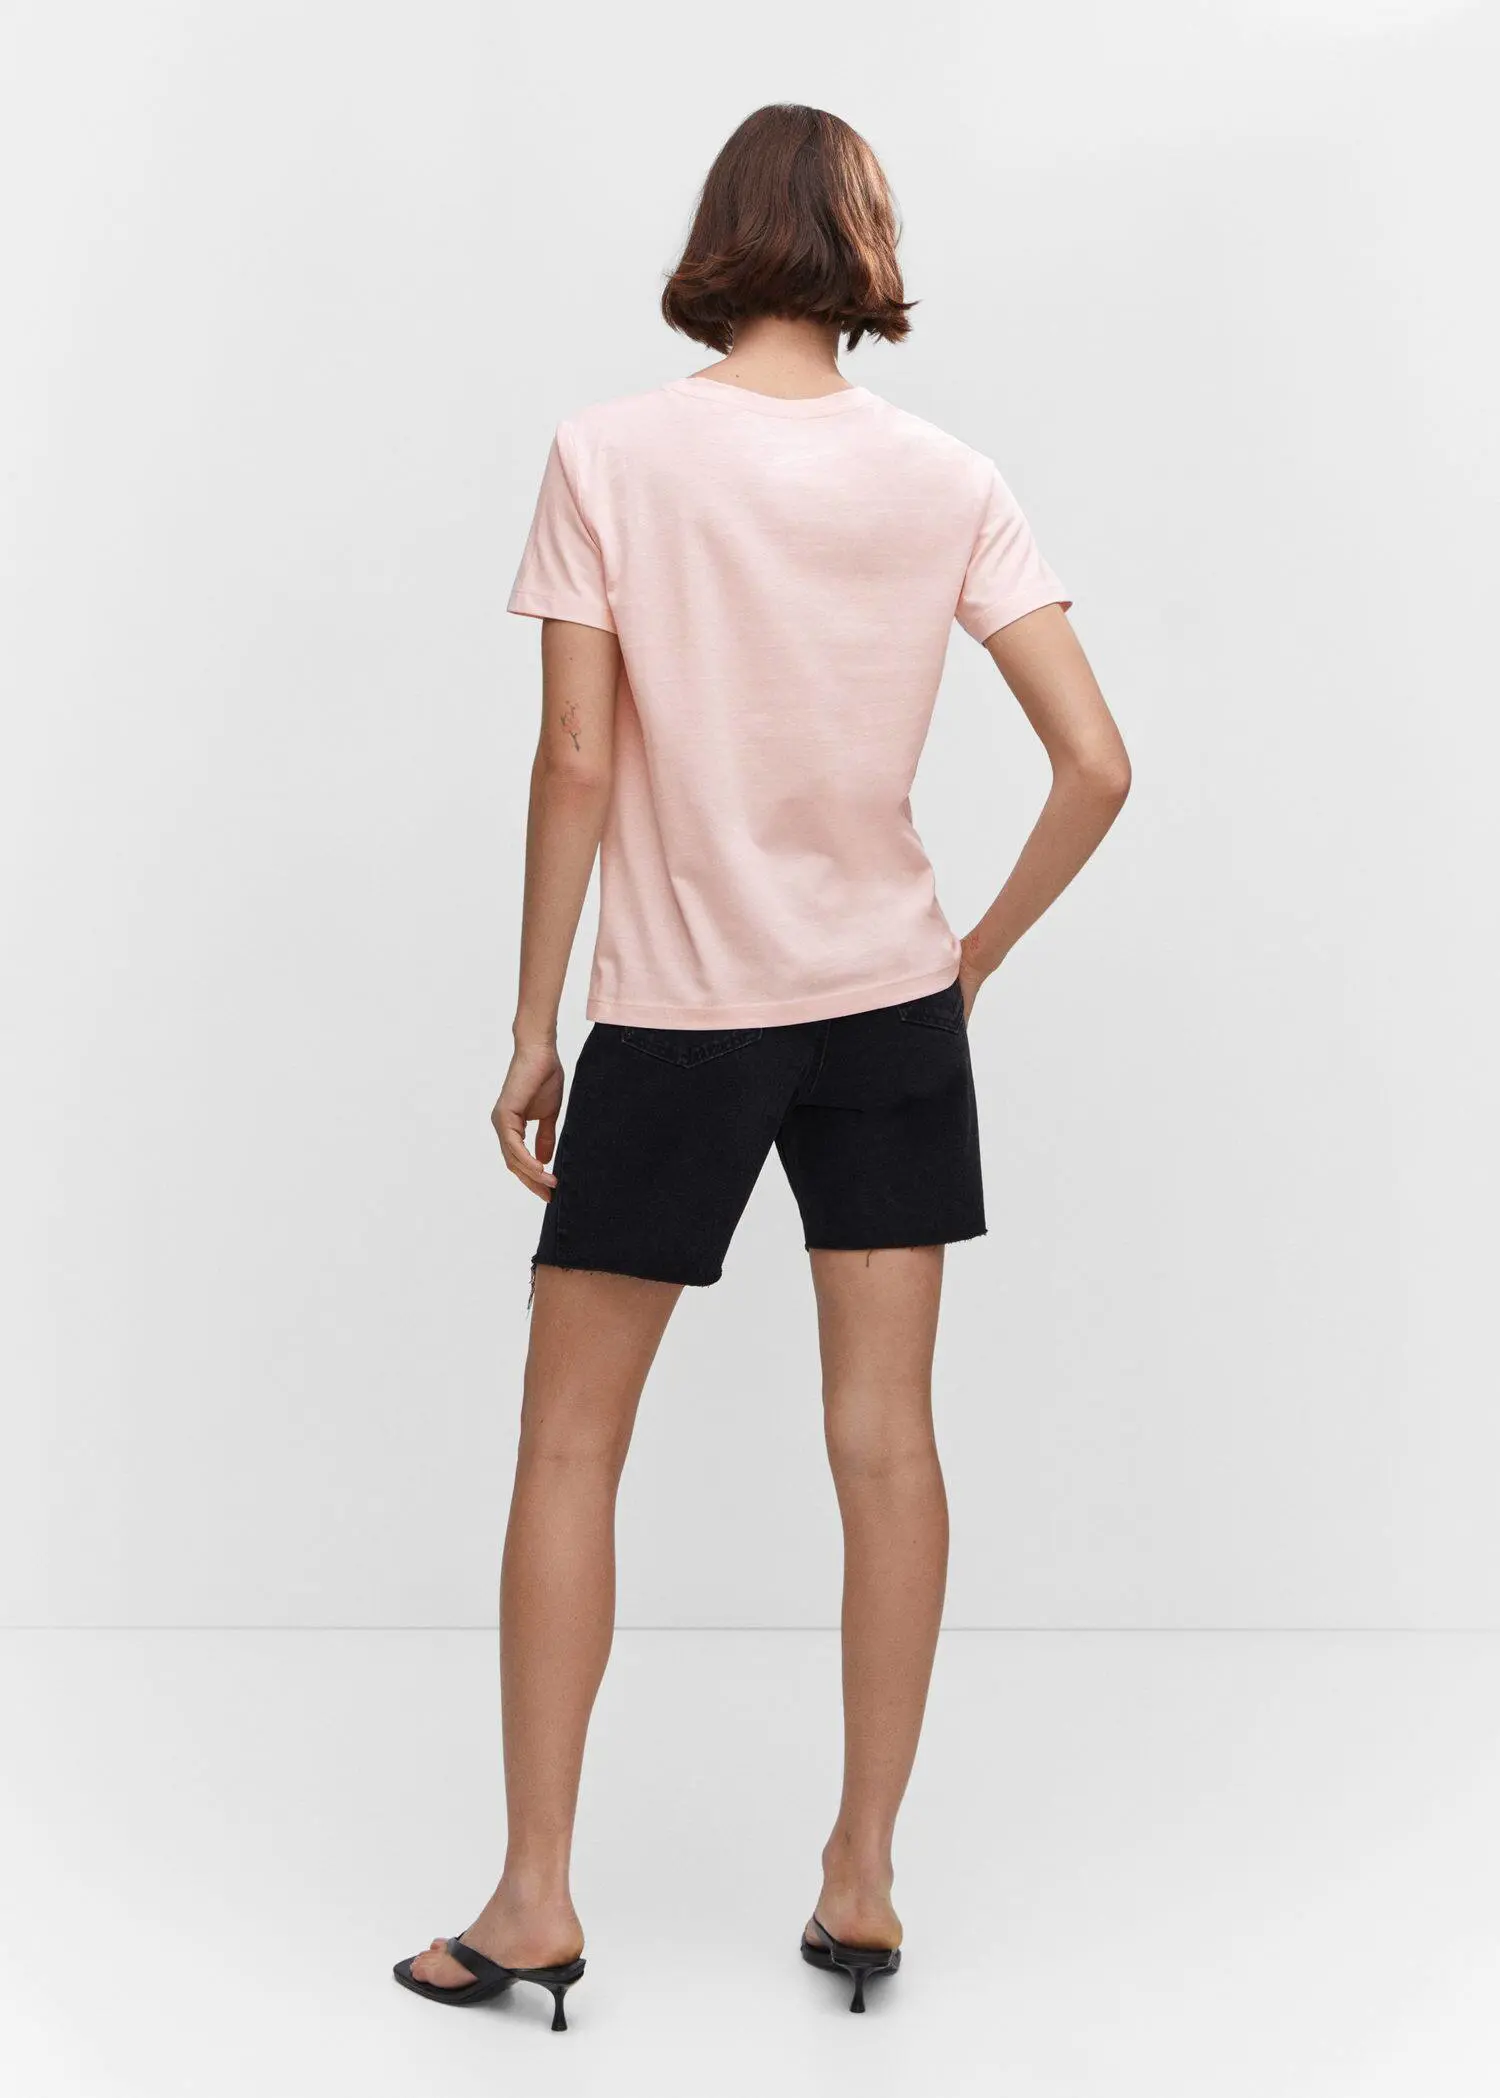 Mango 100% cotton T-shirt. a person wearing black shorts and a light pink shirt. 